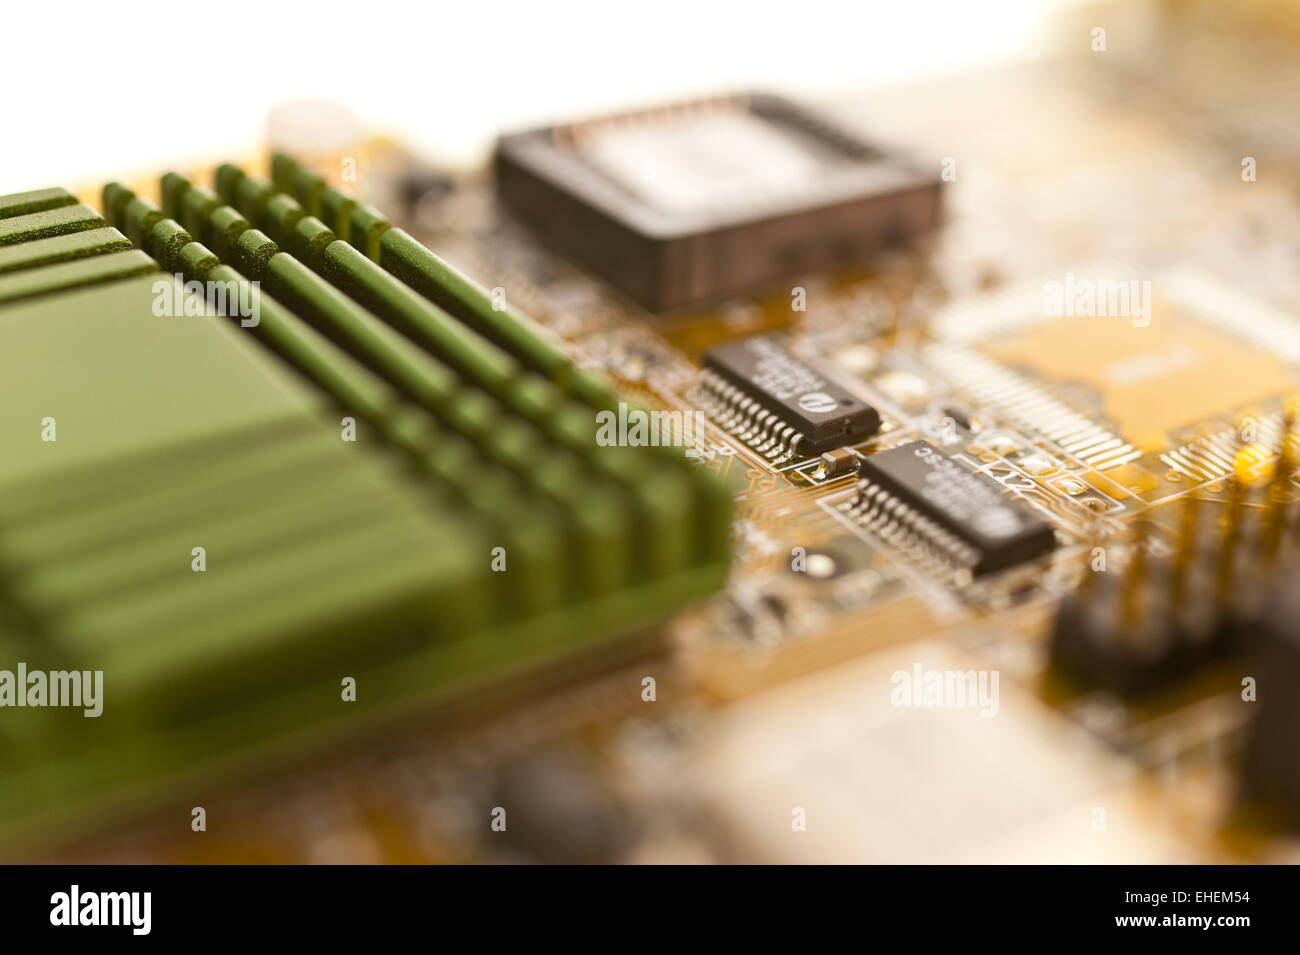 Elektronik - Electronics Stock Photo